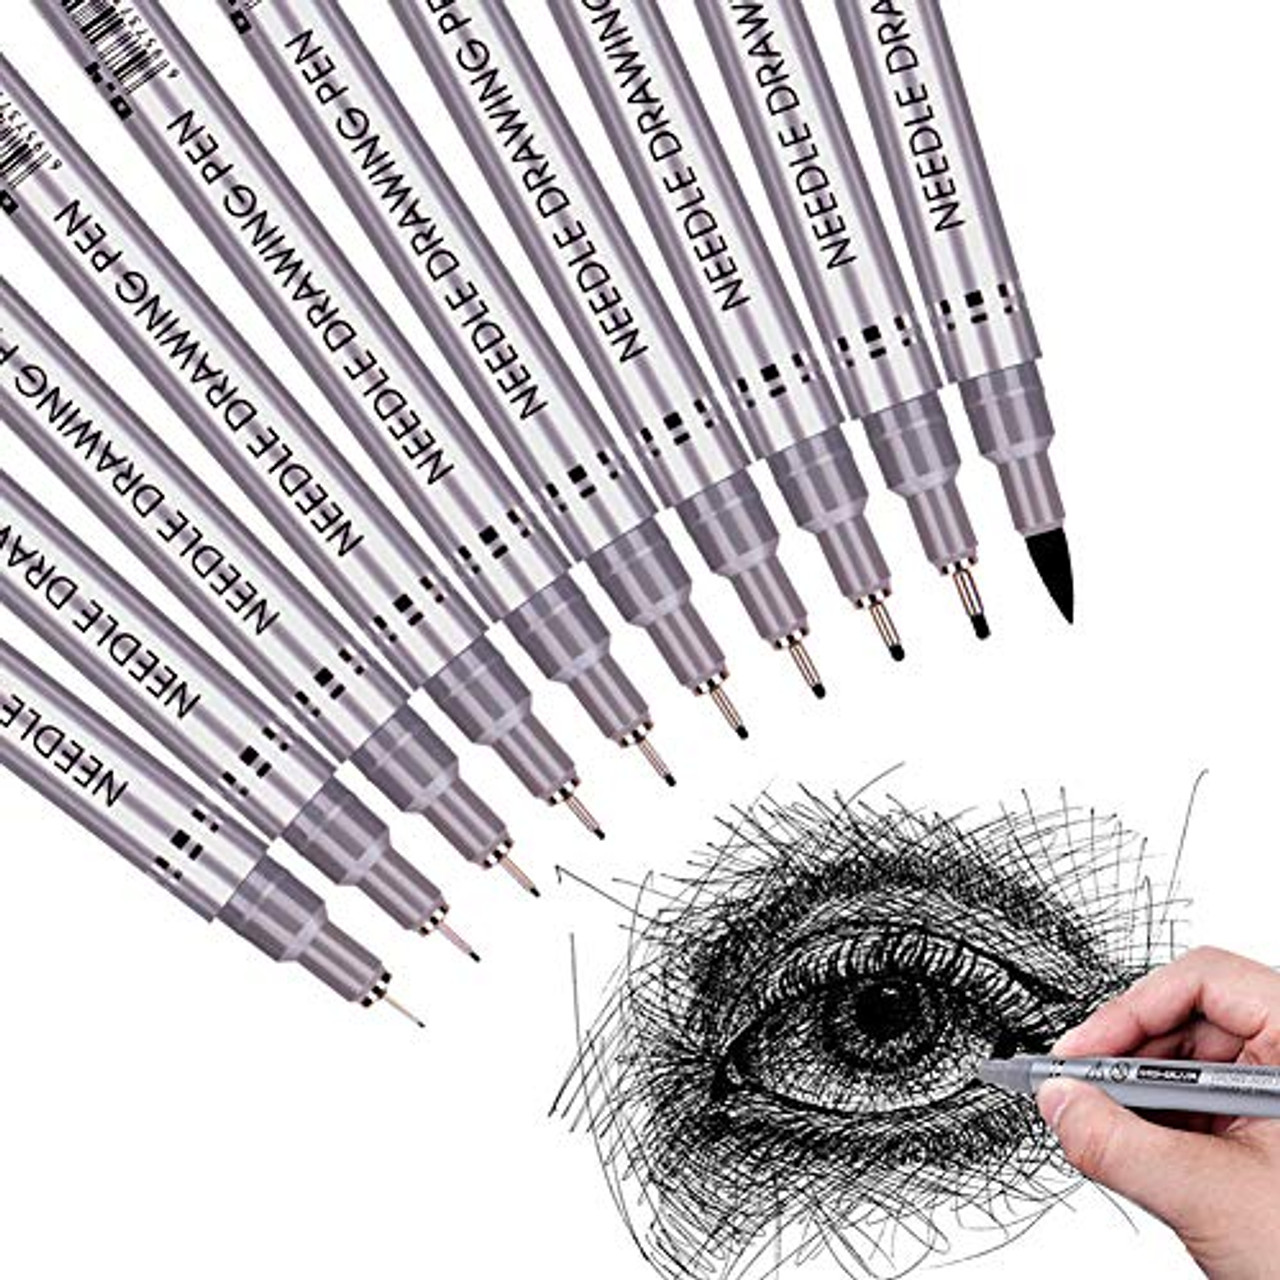 Micro-Line Pens, 0.5MM Felt Tip Drawing Pens, Anime Pens, Sketch